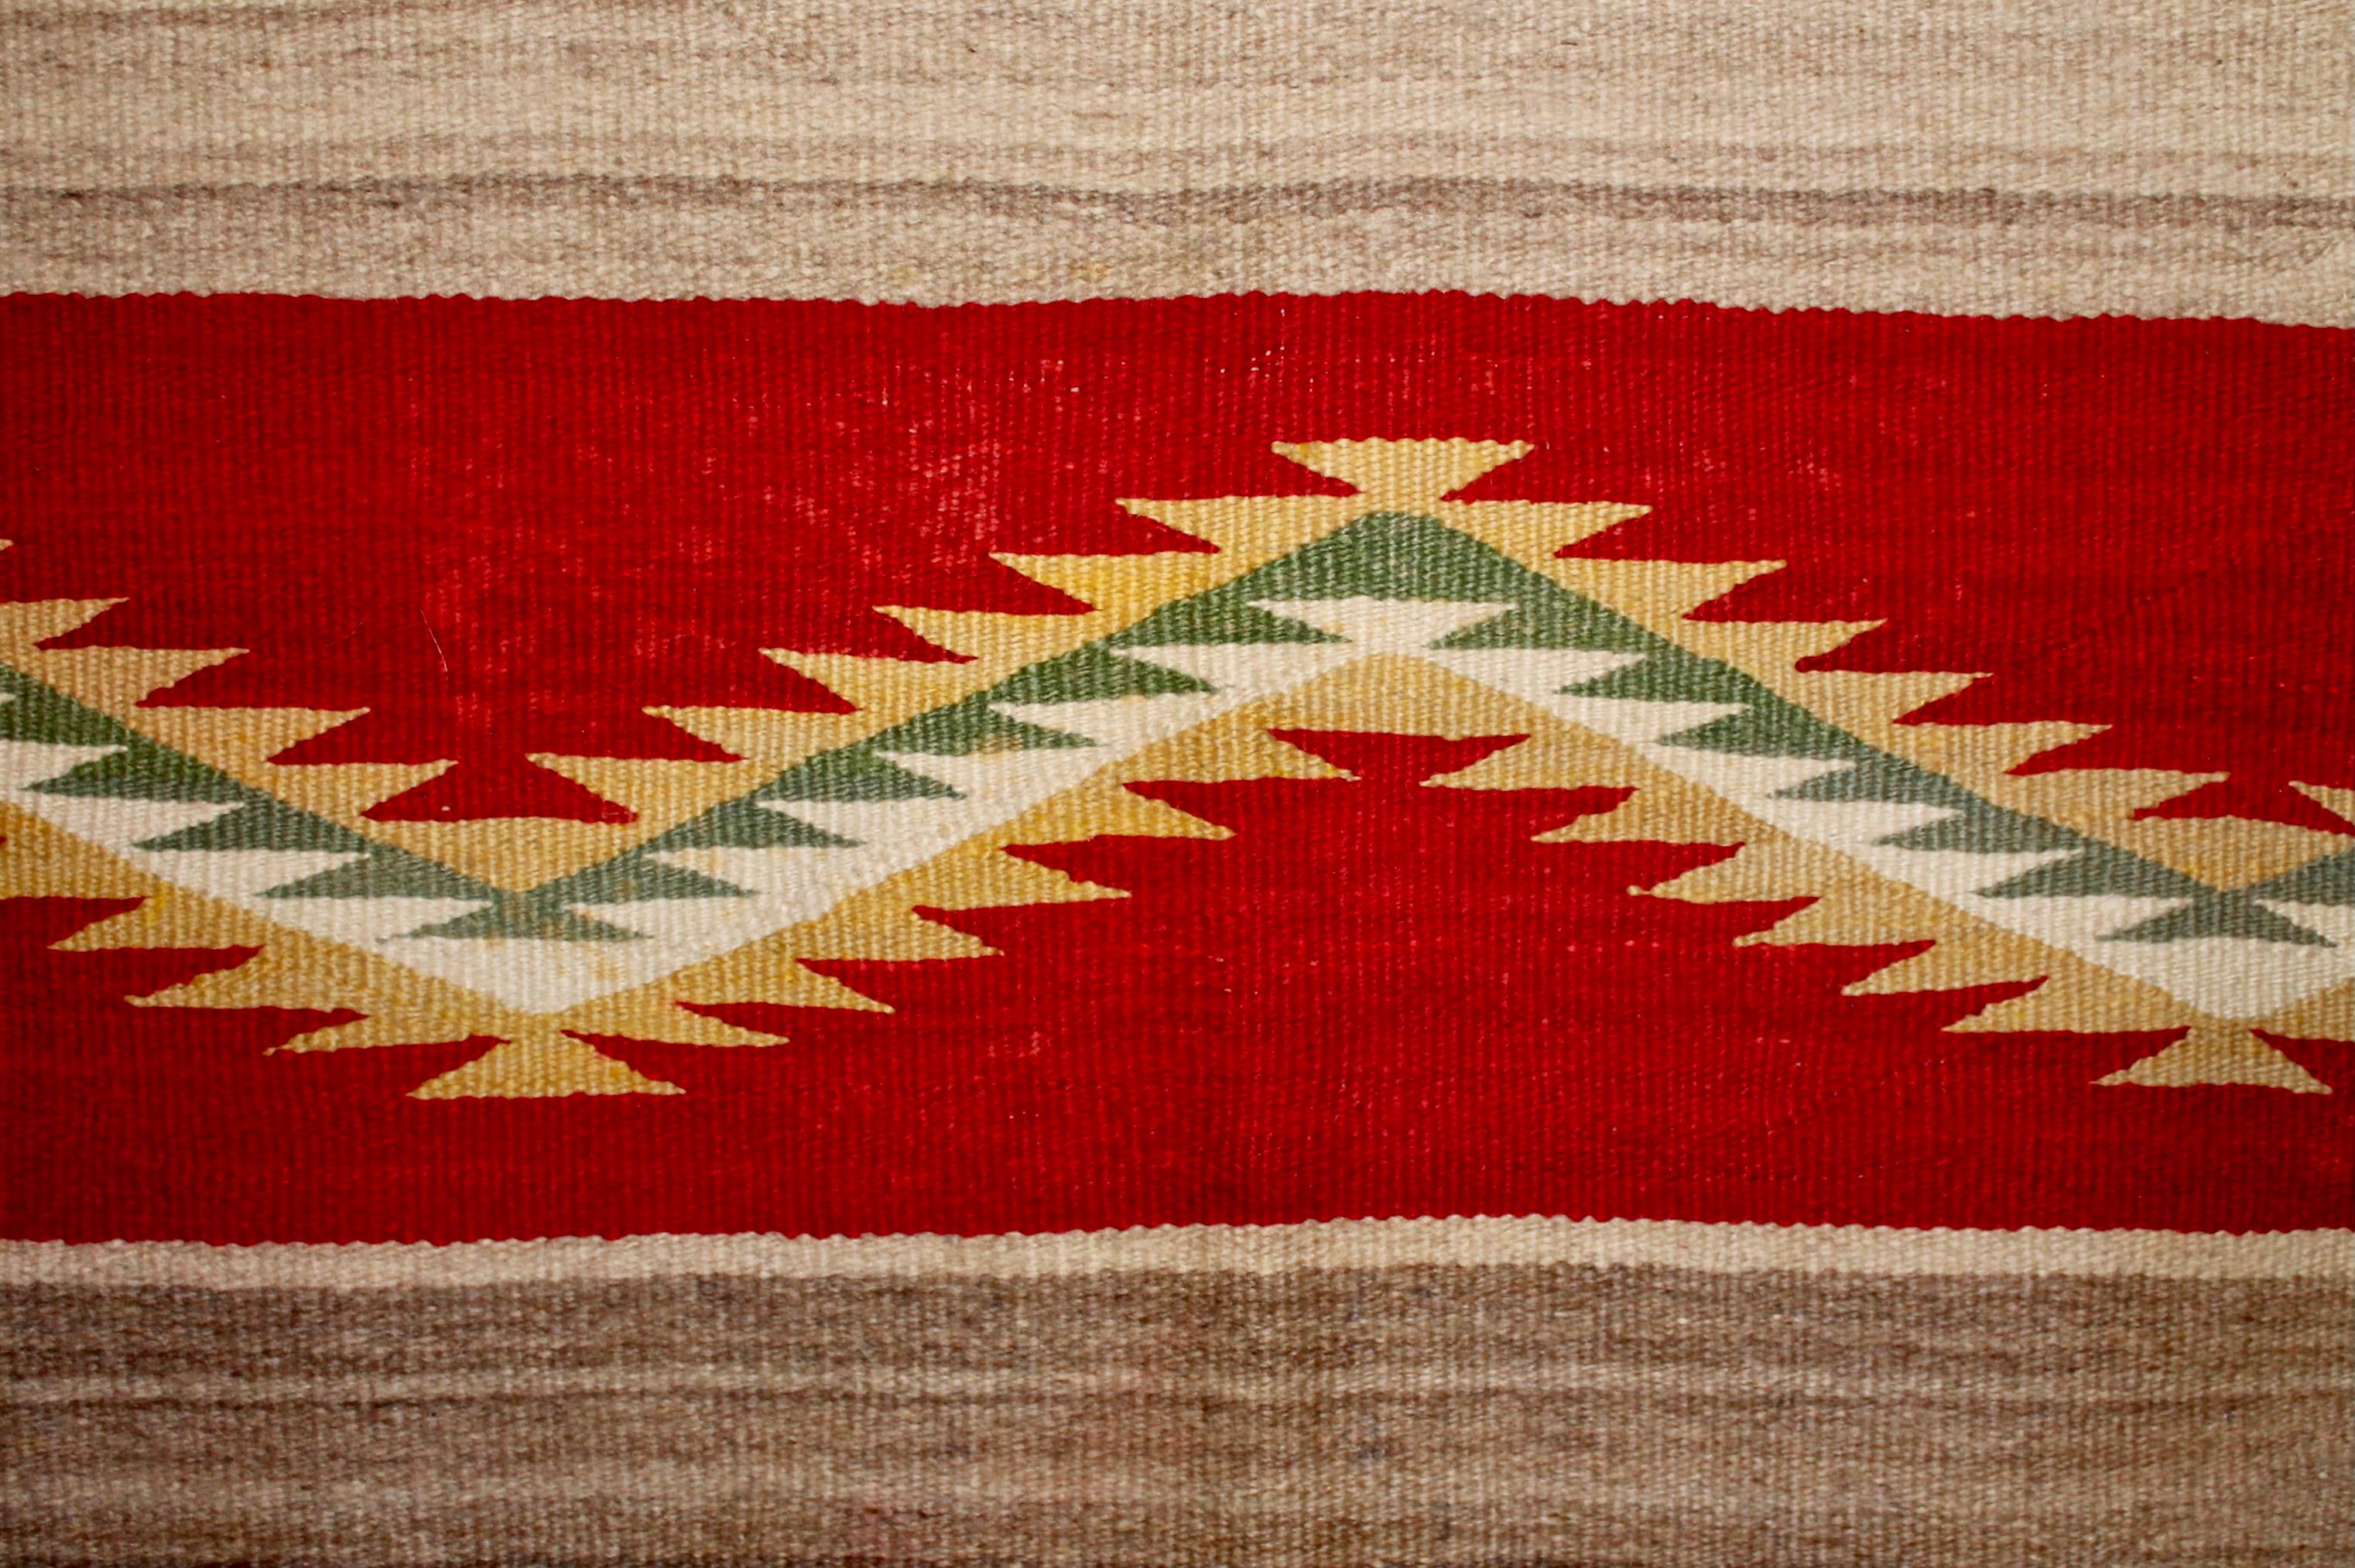 Navajo Transitional Blanket, circa 1880-1900 12